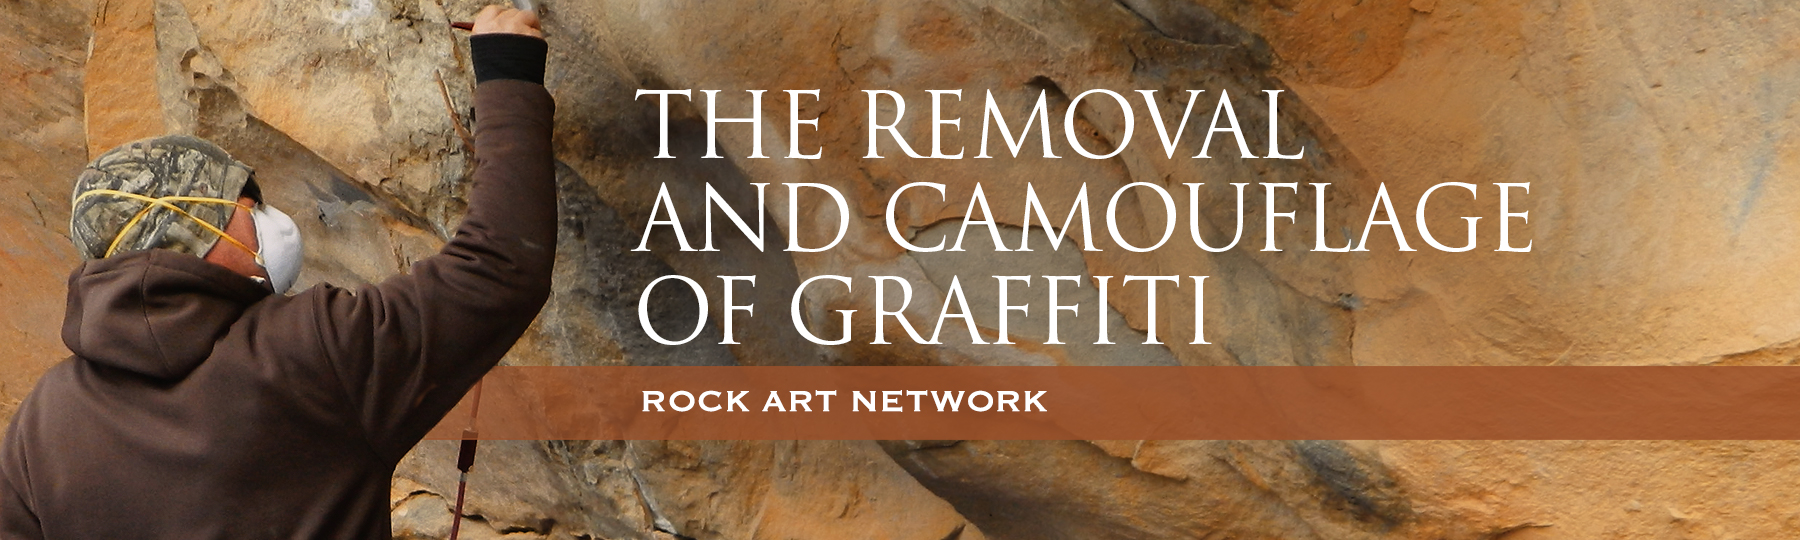 The Rock Art Network Johannes H. N. Loubser